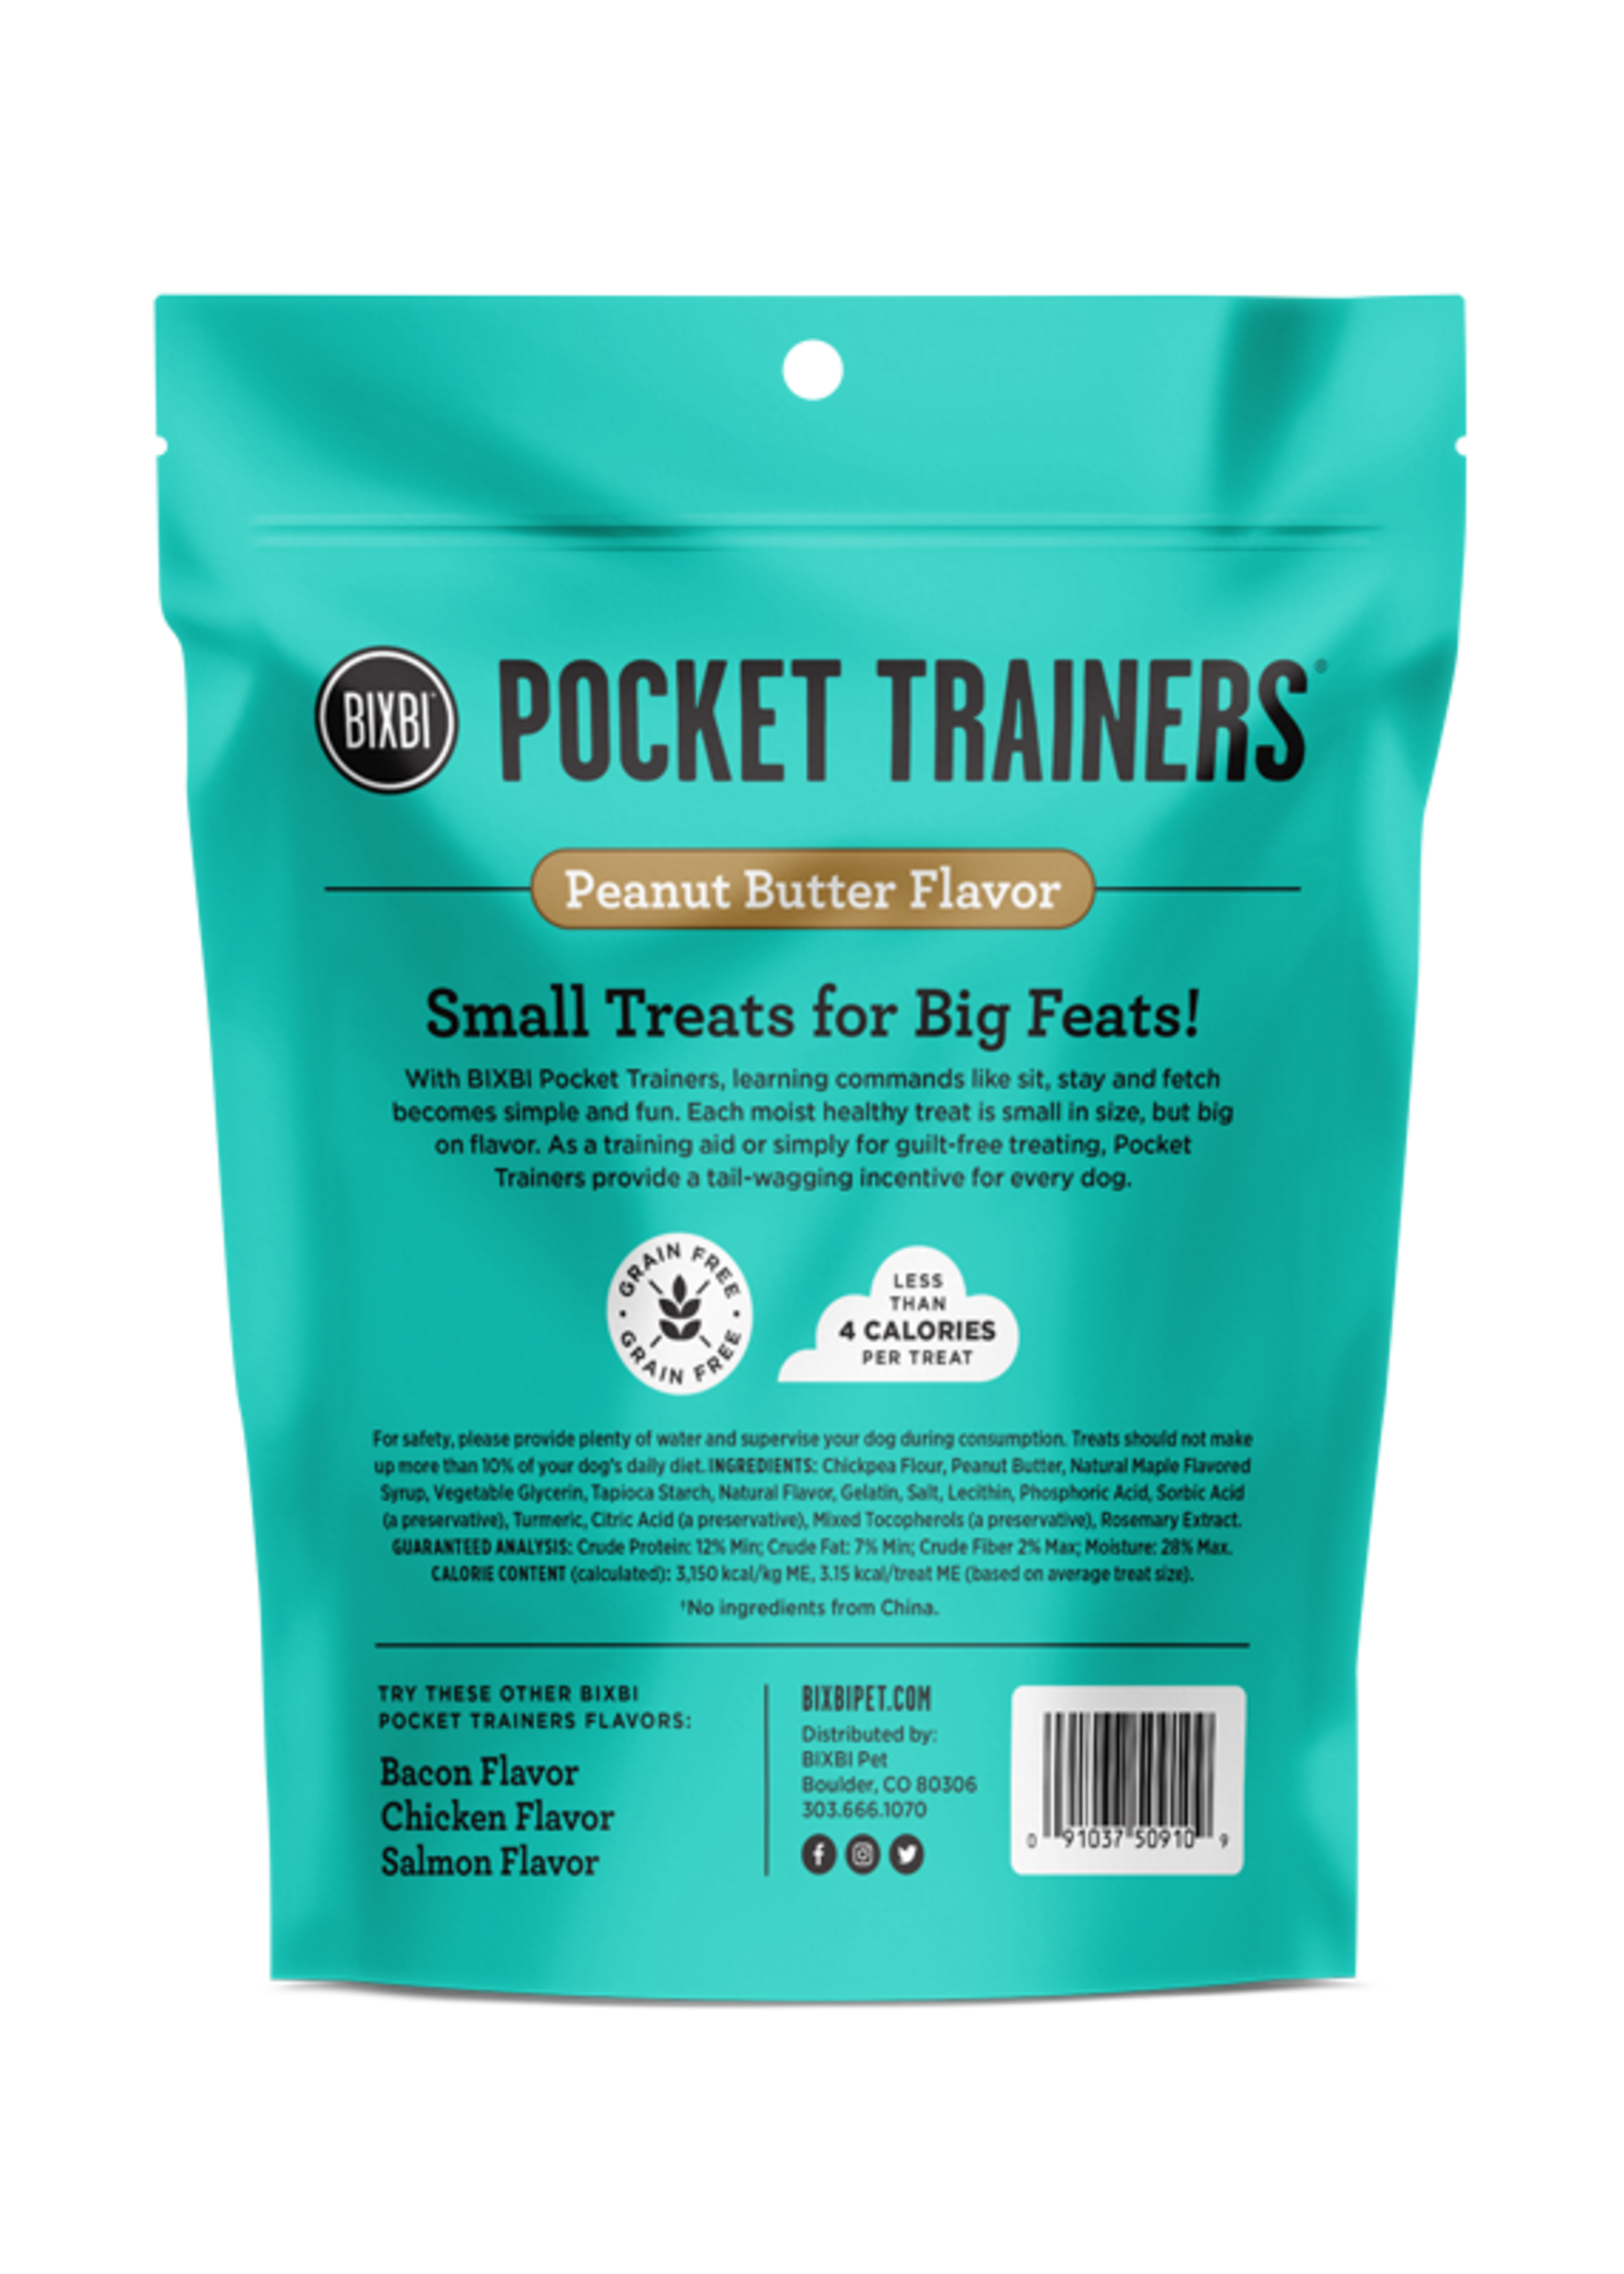 Bixbi Bixbi Pocket Trainers Peanut Butter Flavor Dog Training Treats 6-oz